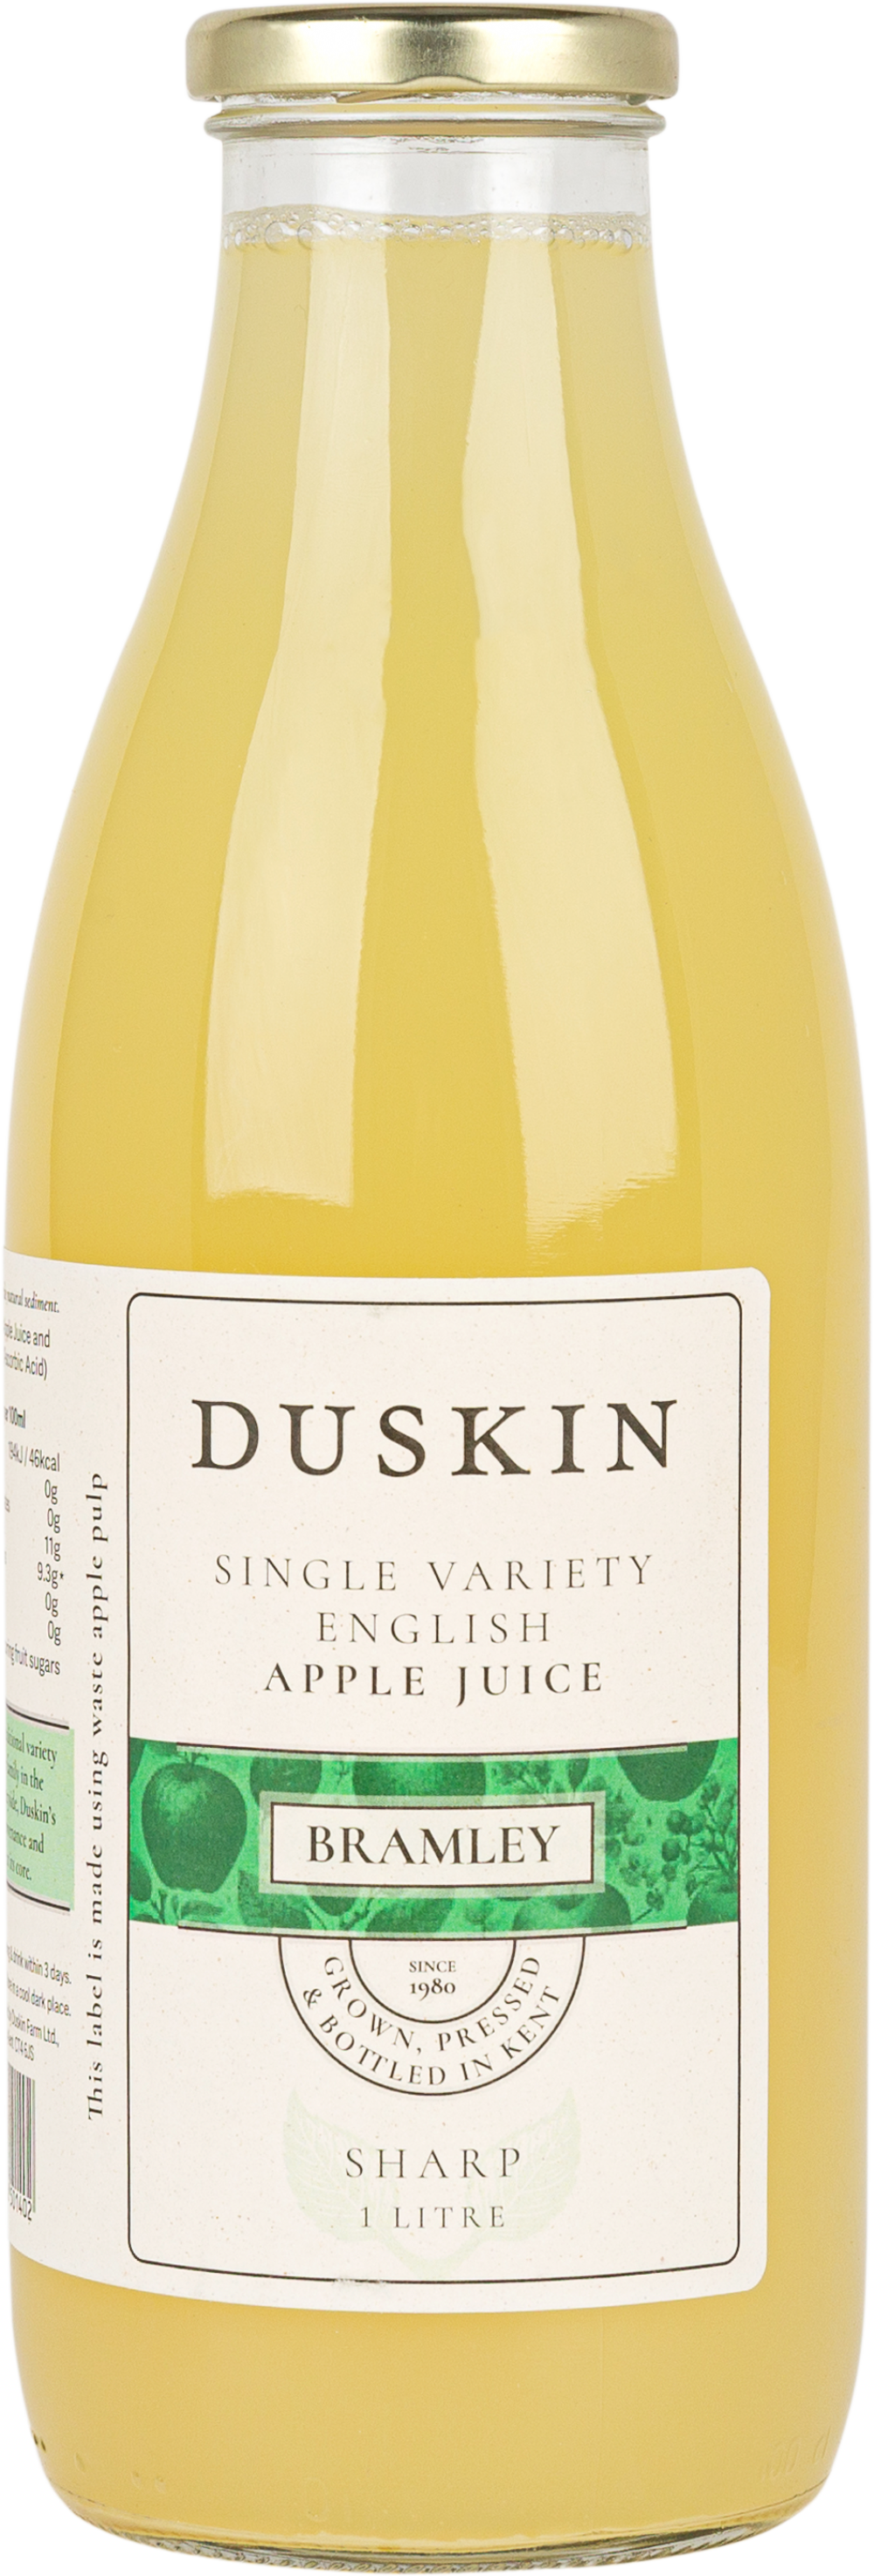 DUSKIN Pure English Apple Juice - Bramley 1L